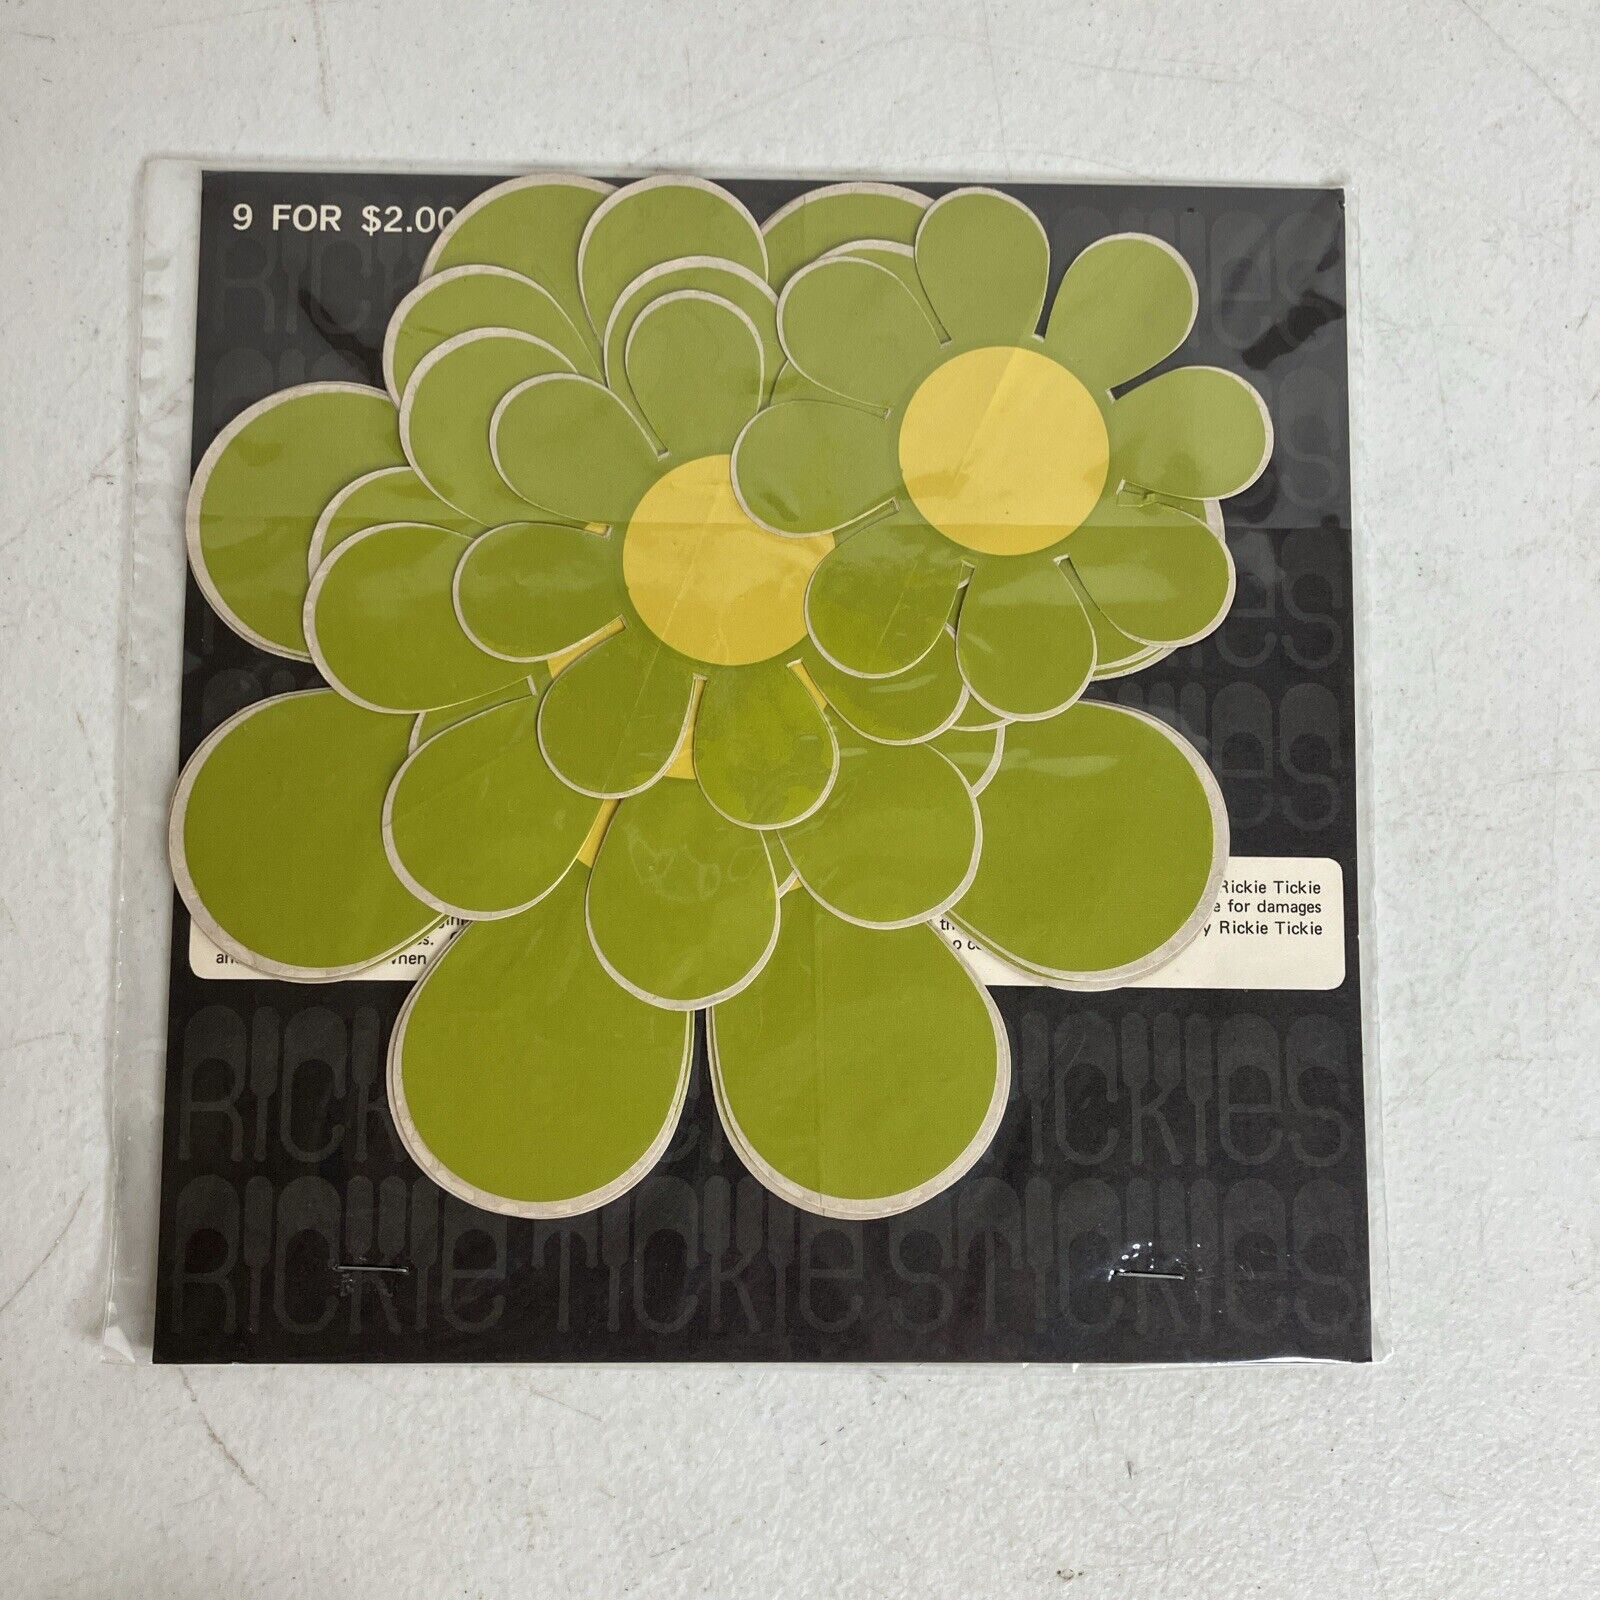 NOS Vintage 1968 Pop Art Rickie Tickie Stickies Psychedelic Flowers Stickers